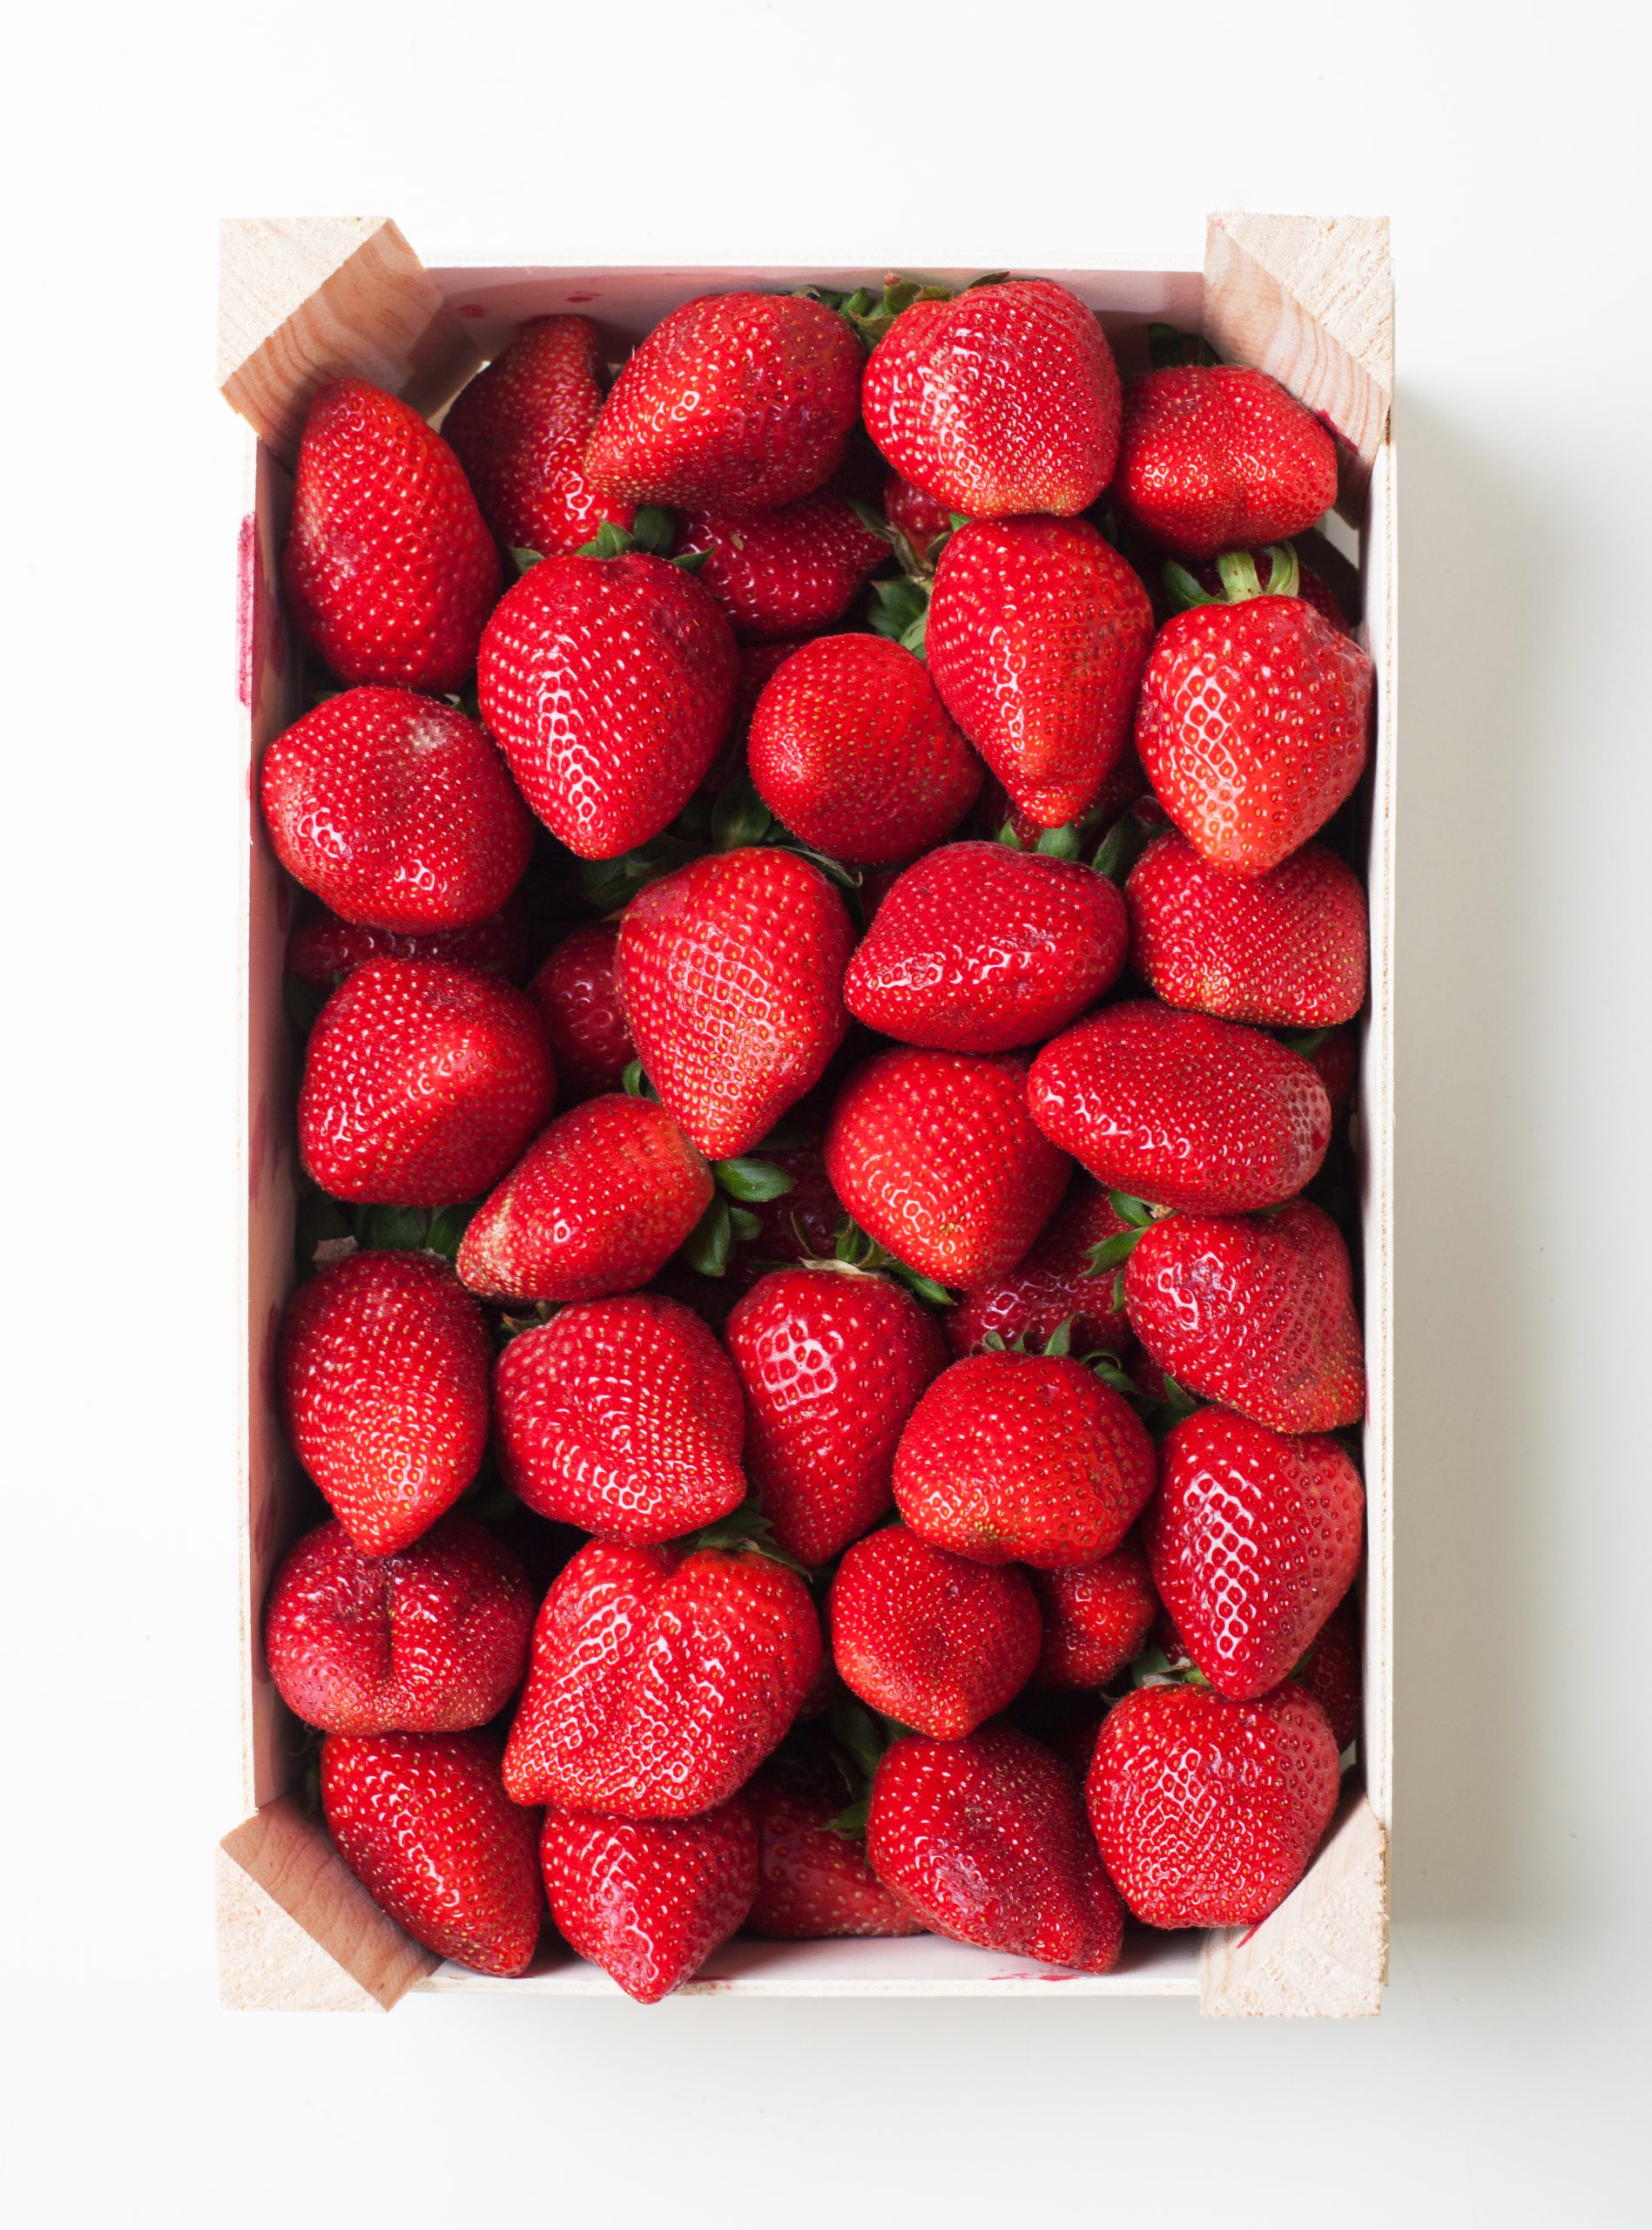 Strawberries in Dubai supermarket